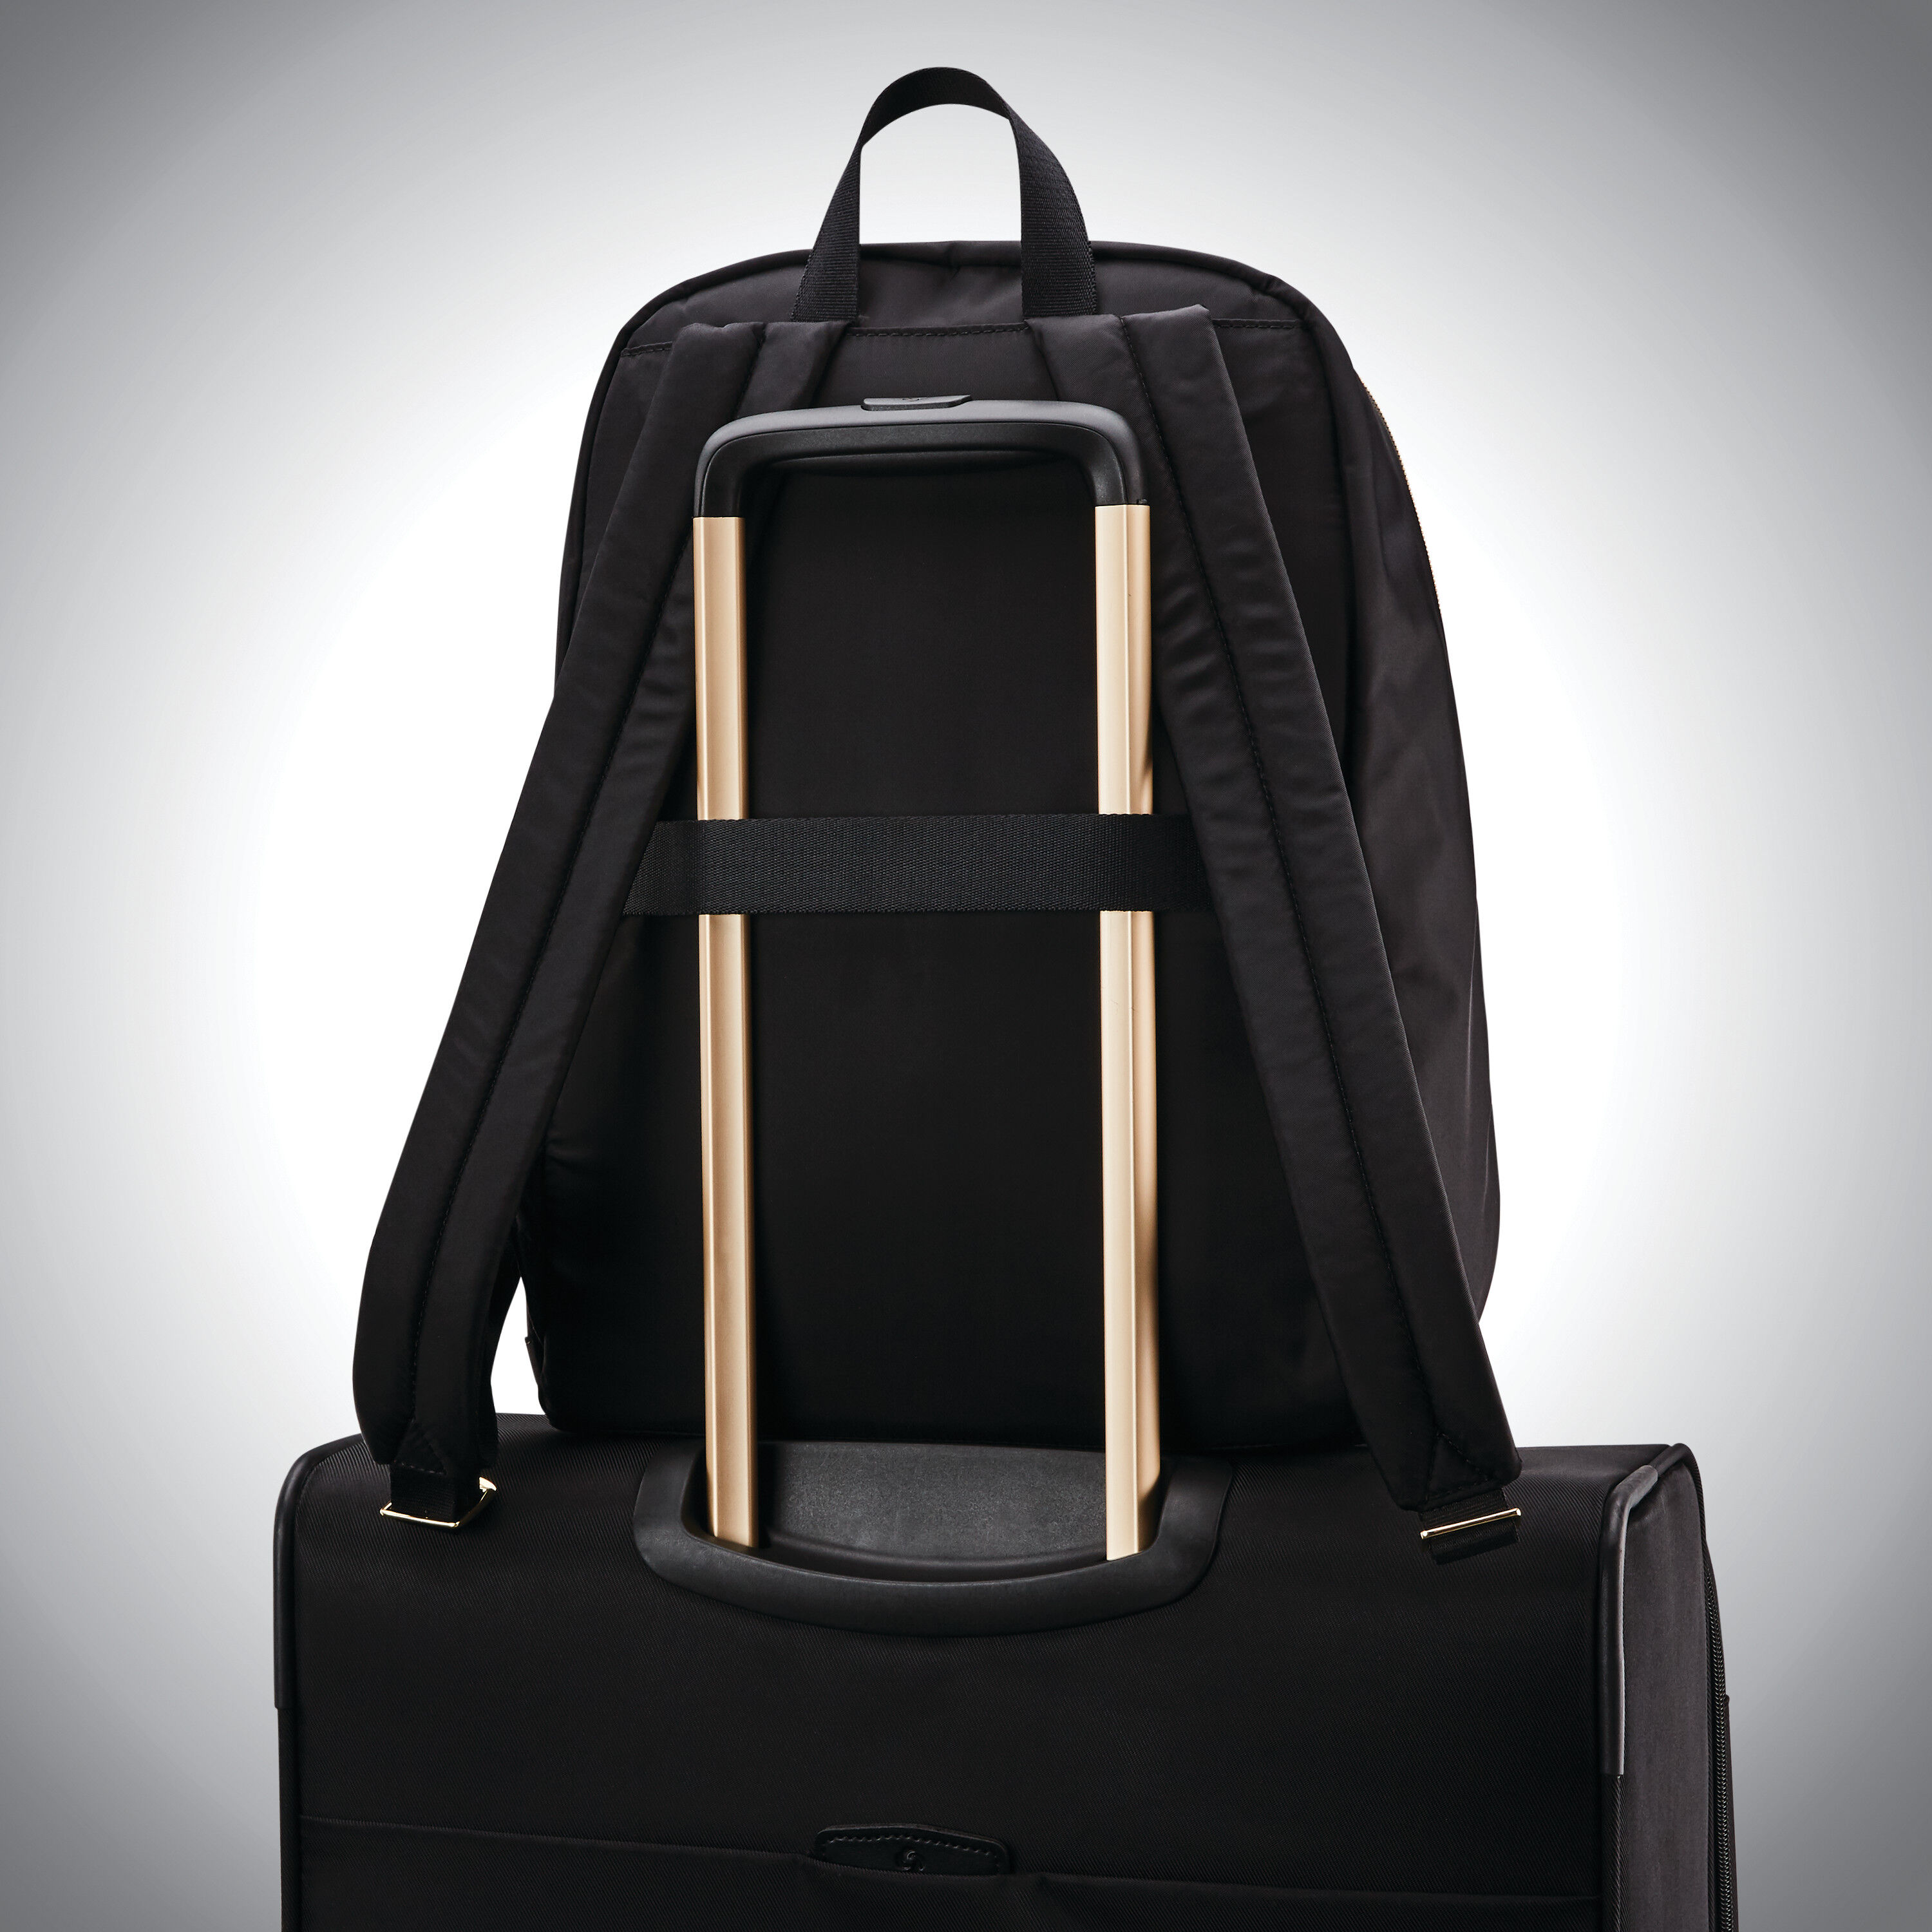 Buy Mobile Solution Essential Backpack for USD 55.99 | Samsonite US